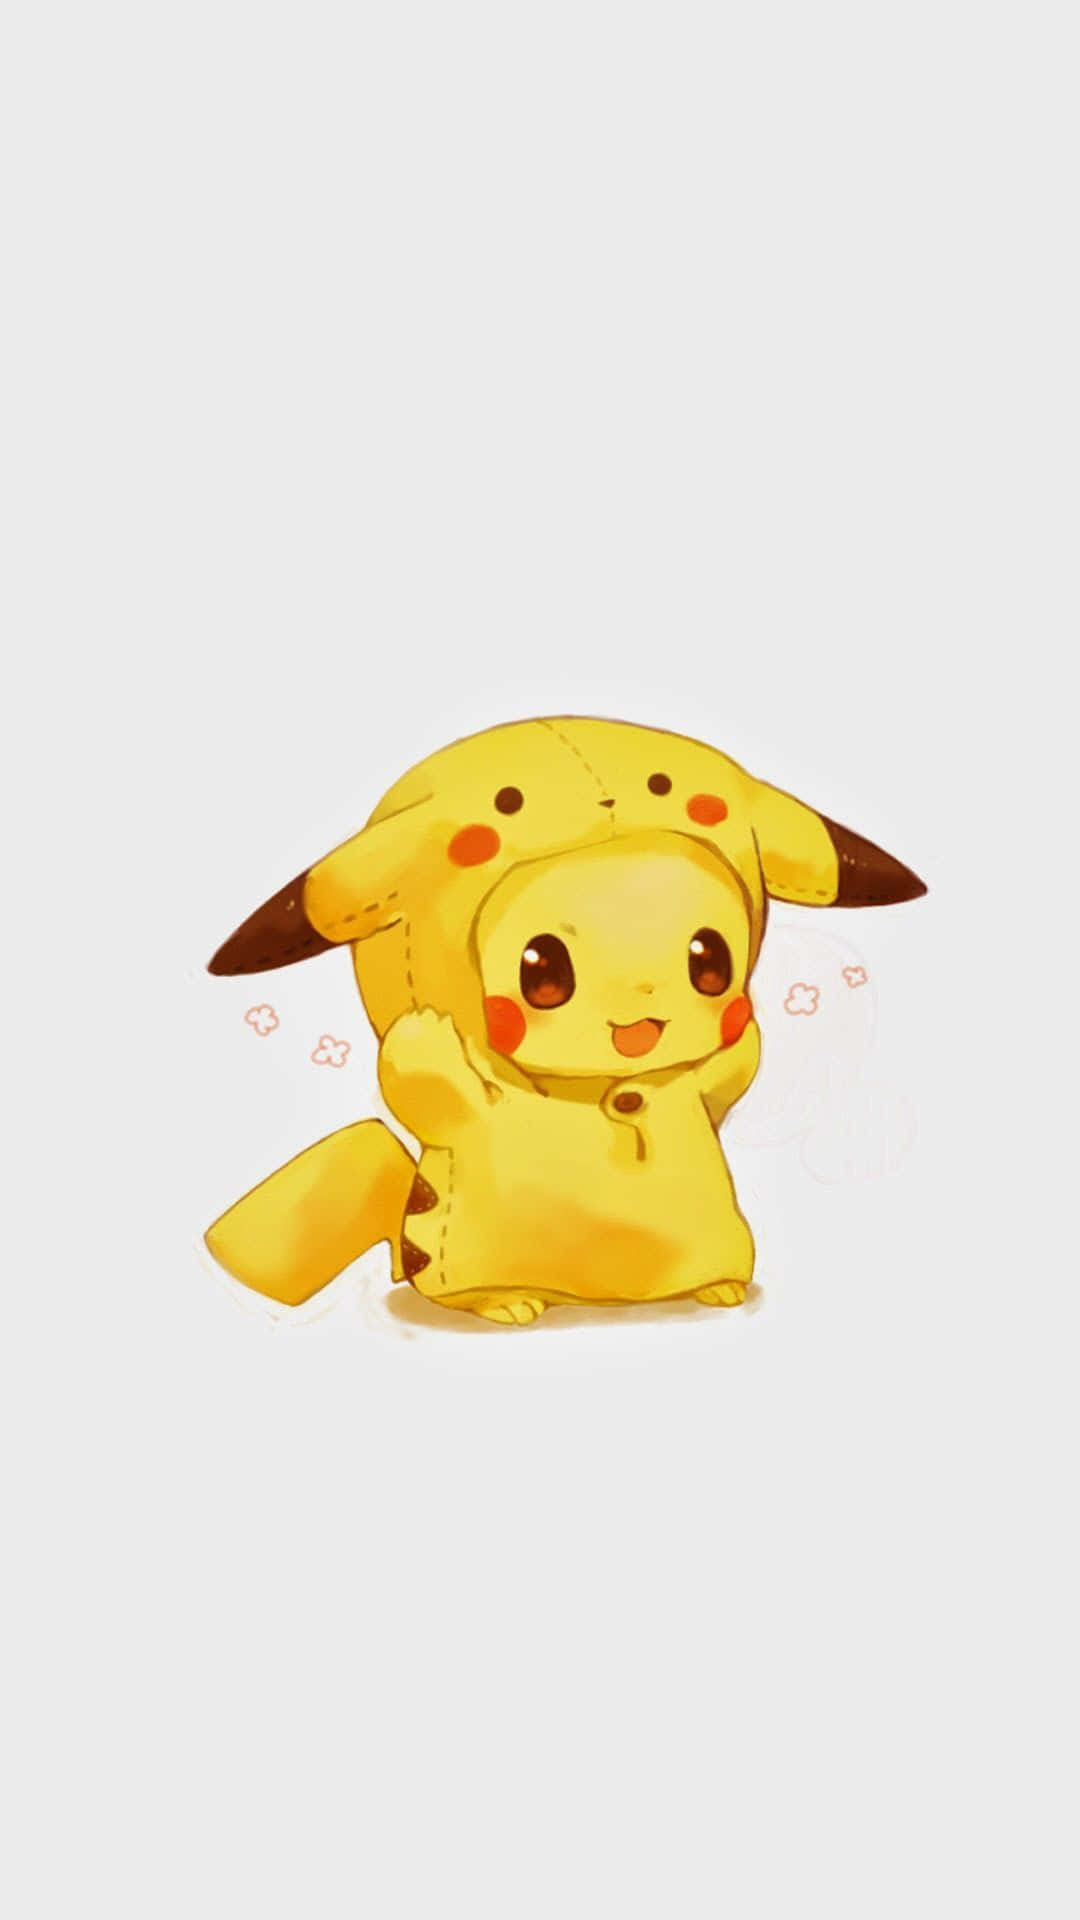 Gladsöt Bebis Pikachu Wallpaper